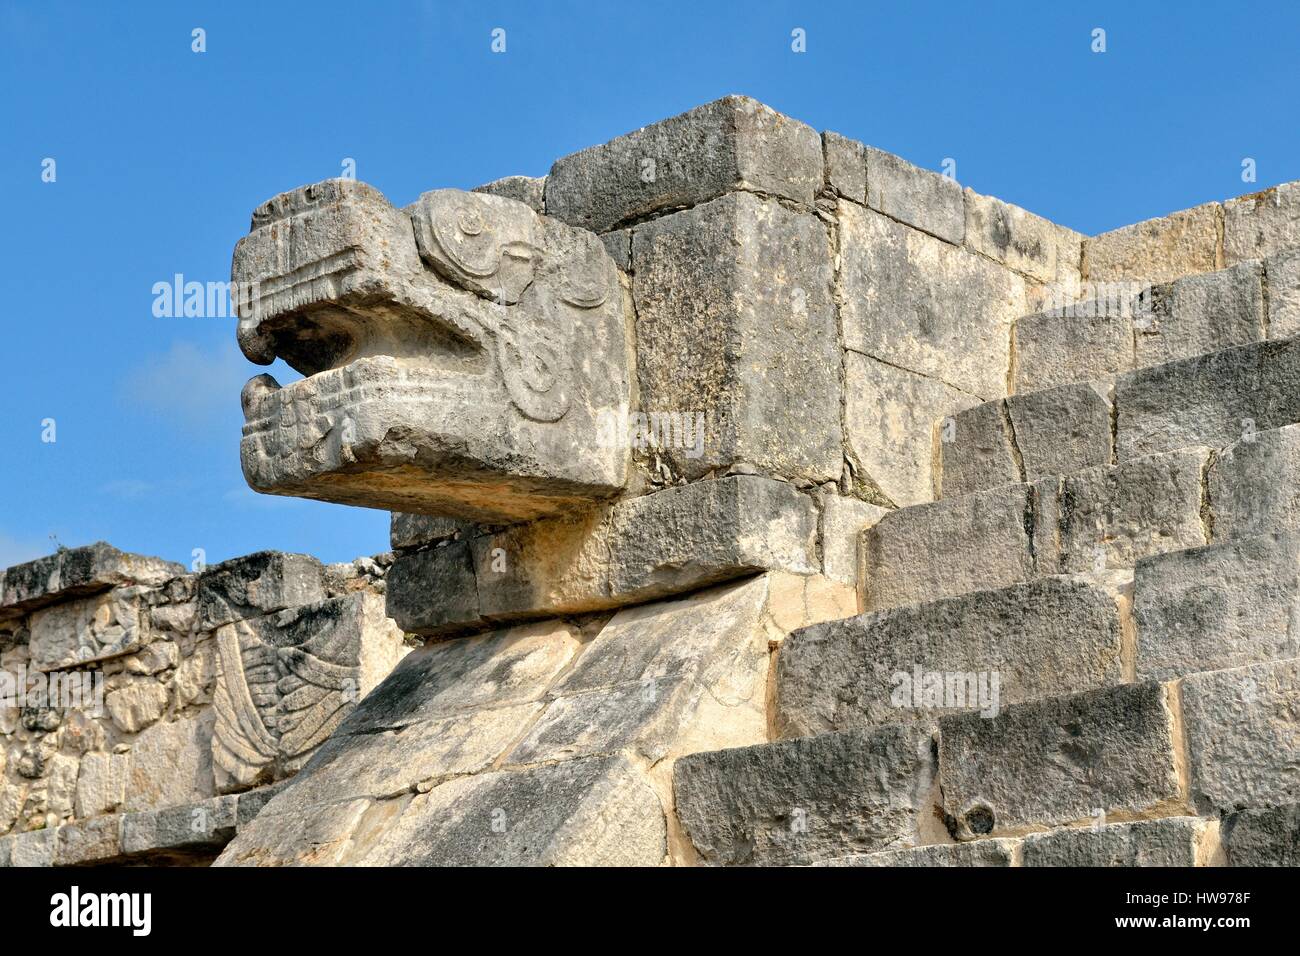 Snakehead, Plataforma de Venus, Venus Plattform, historischen Maya-Stadt Chichen Itza, Piste, Yucatan, Mexiko Stockfoto